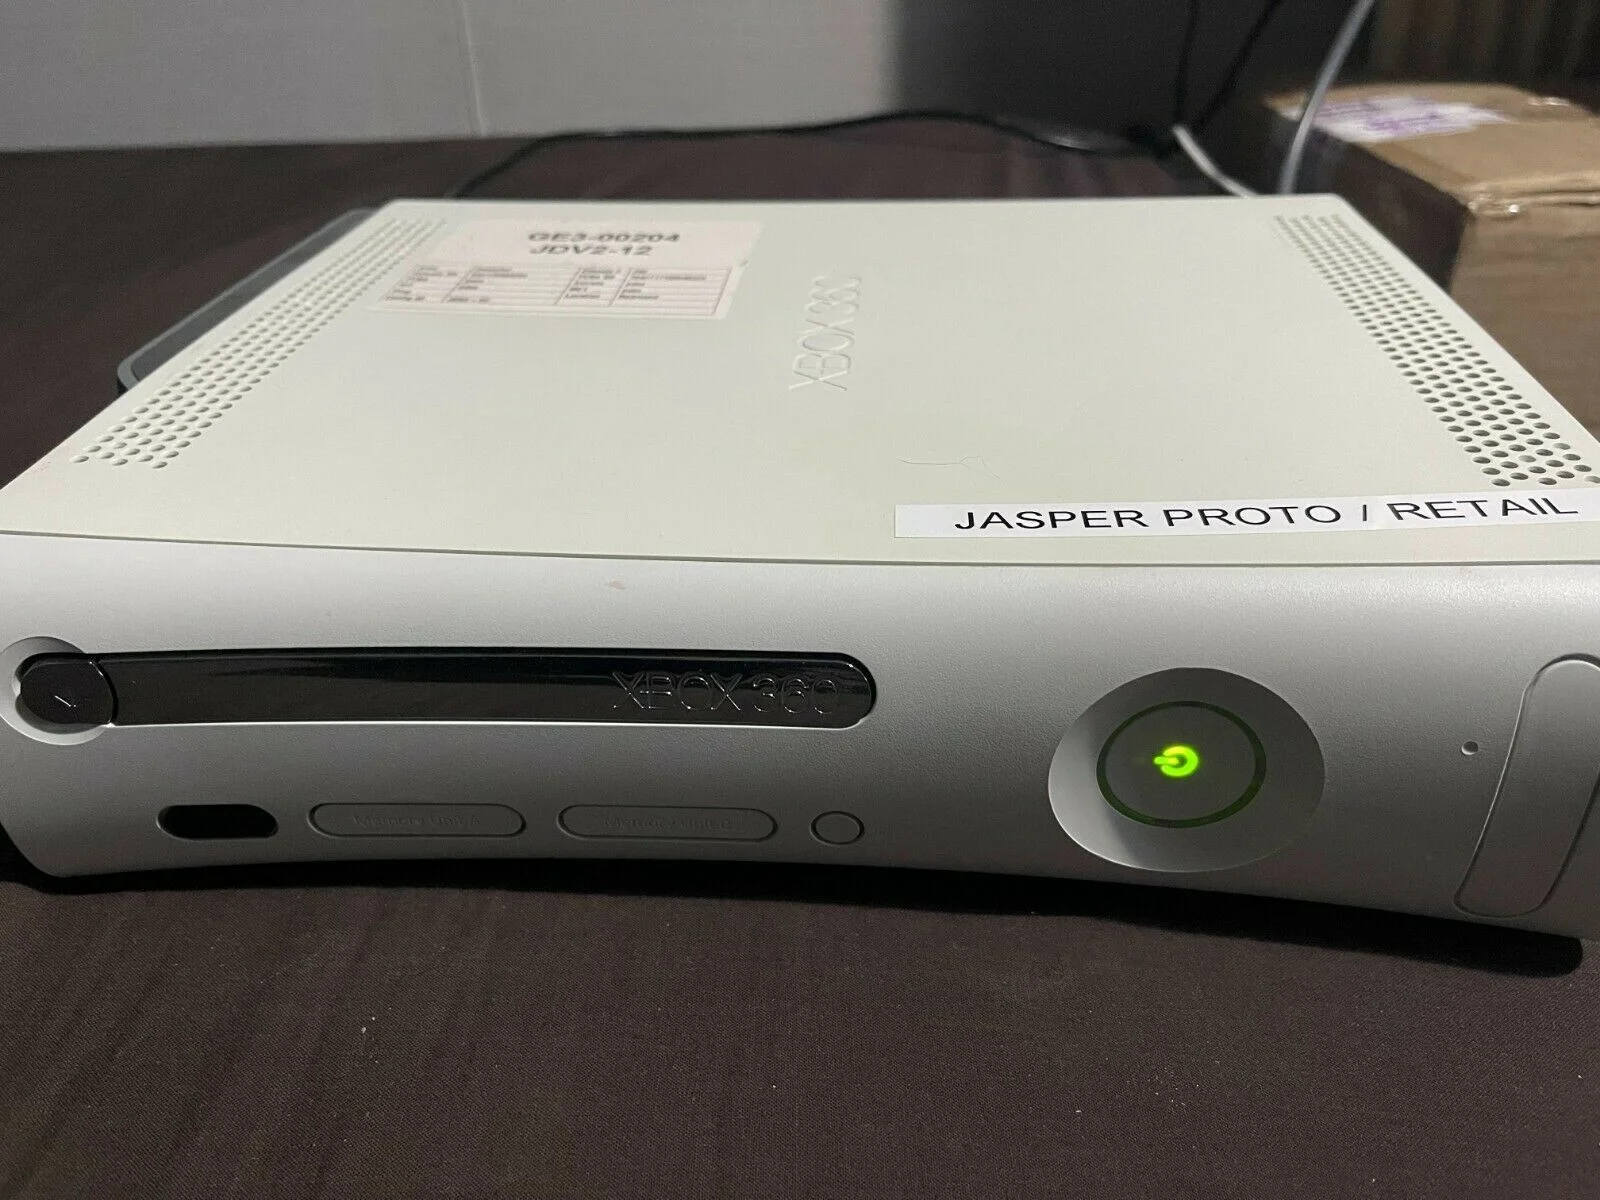  Microsoft Xbox 360 Jasper JDV2-12 GE3-00204 Retail Prototype